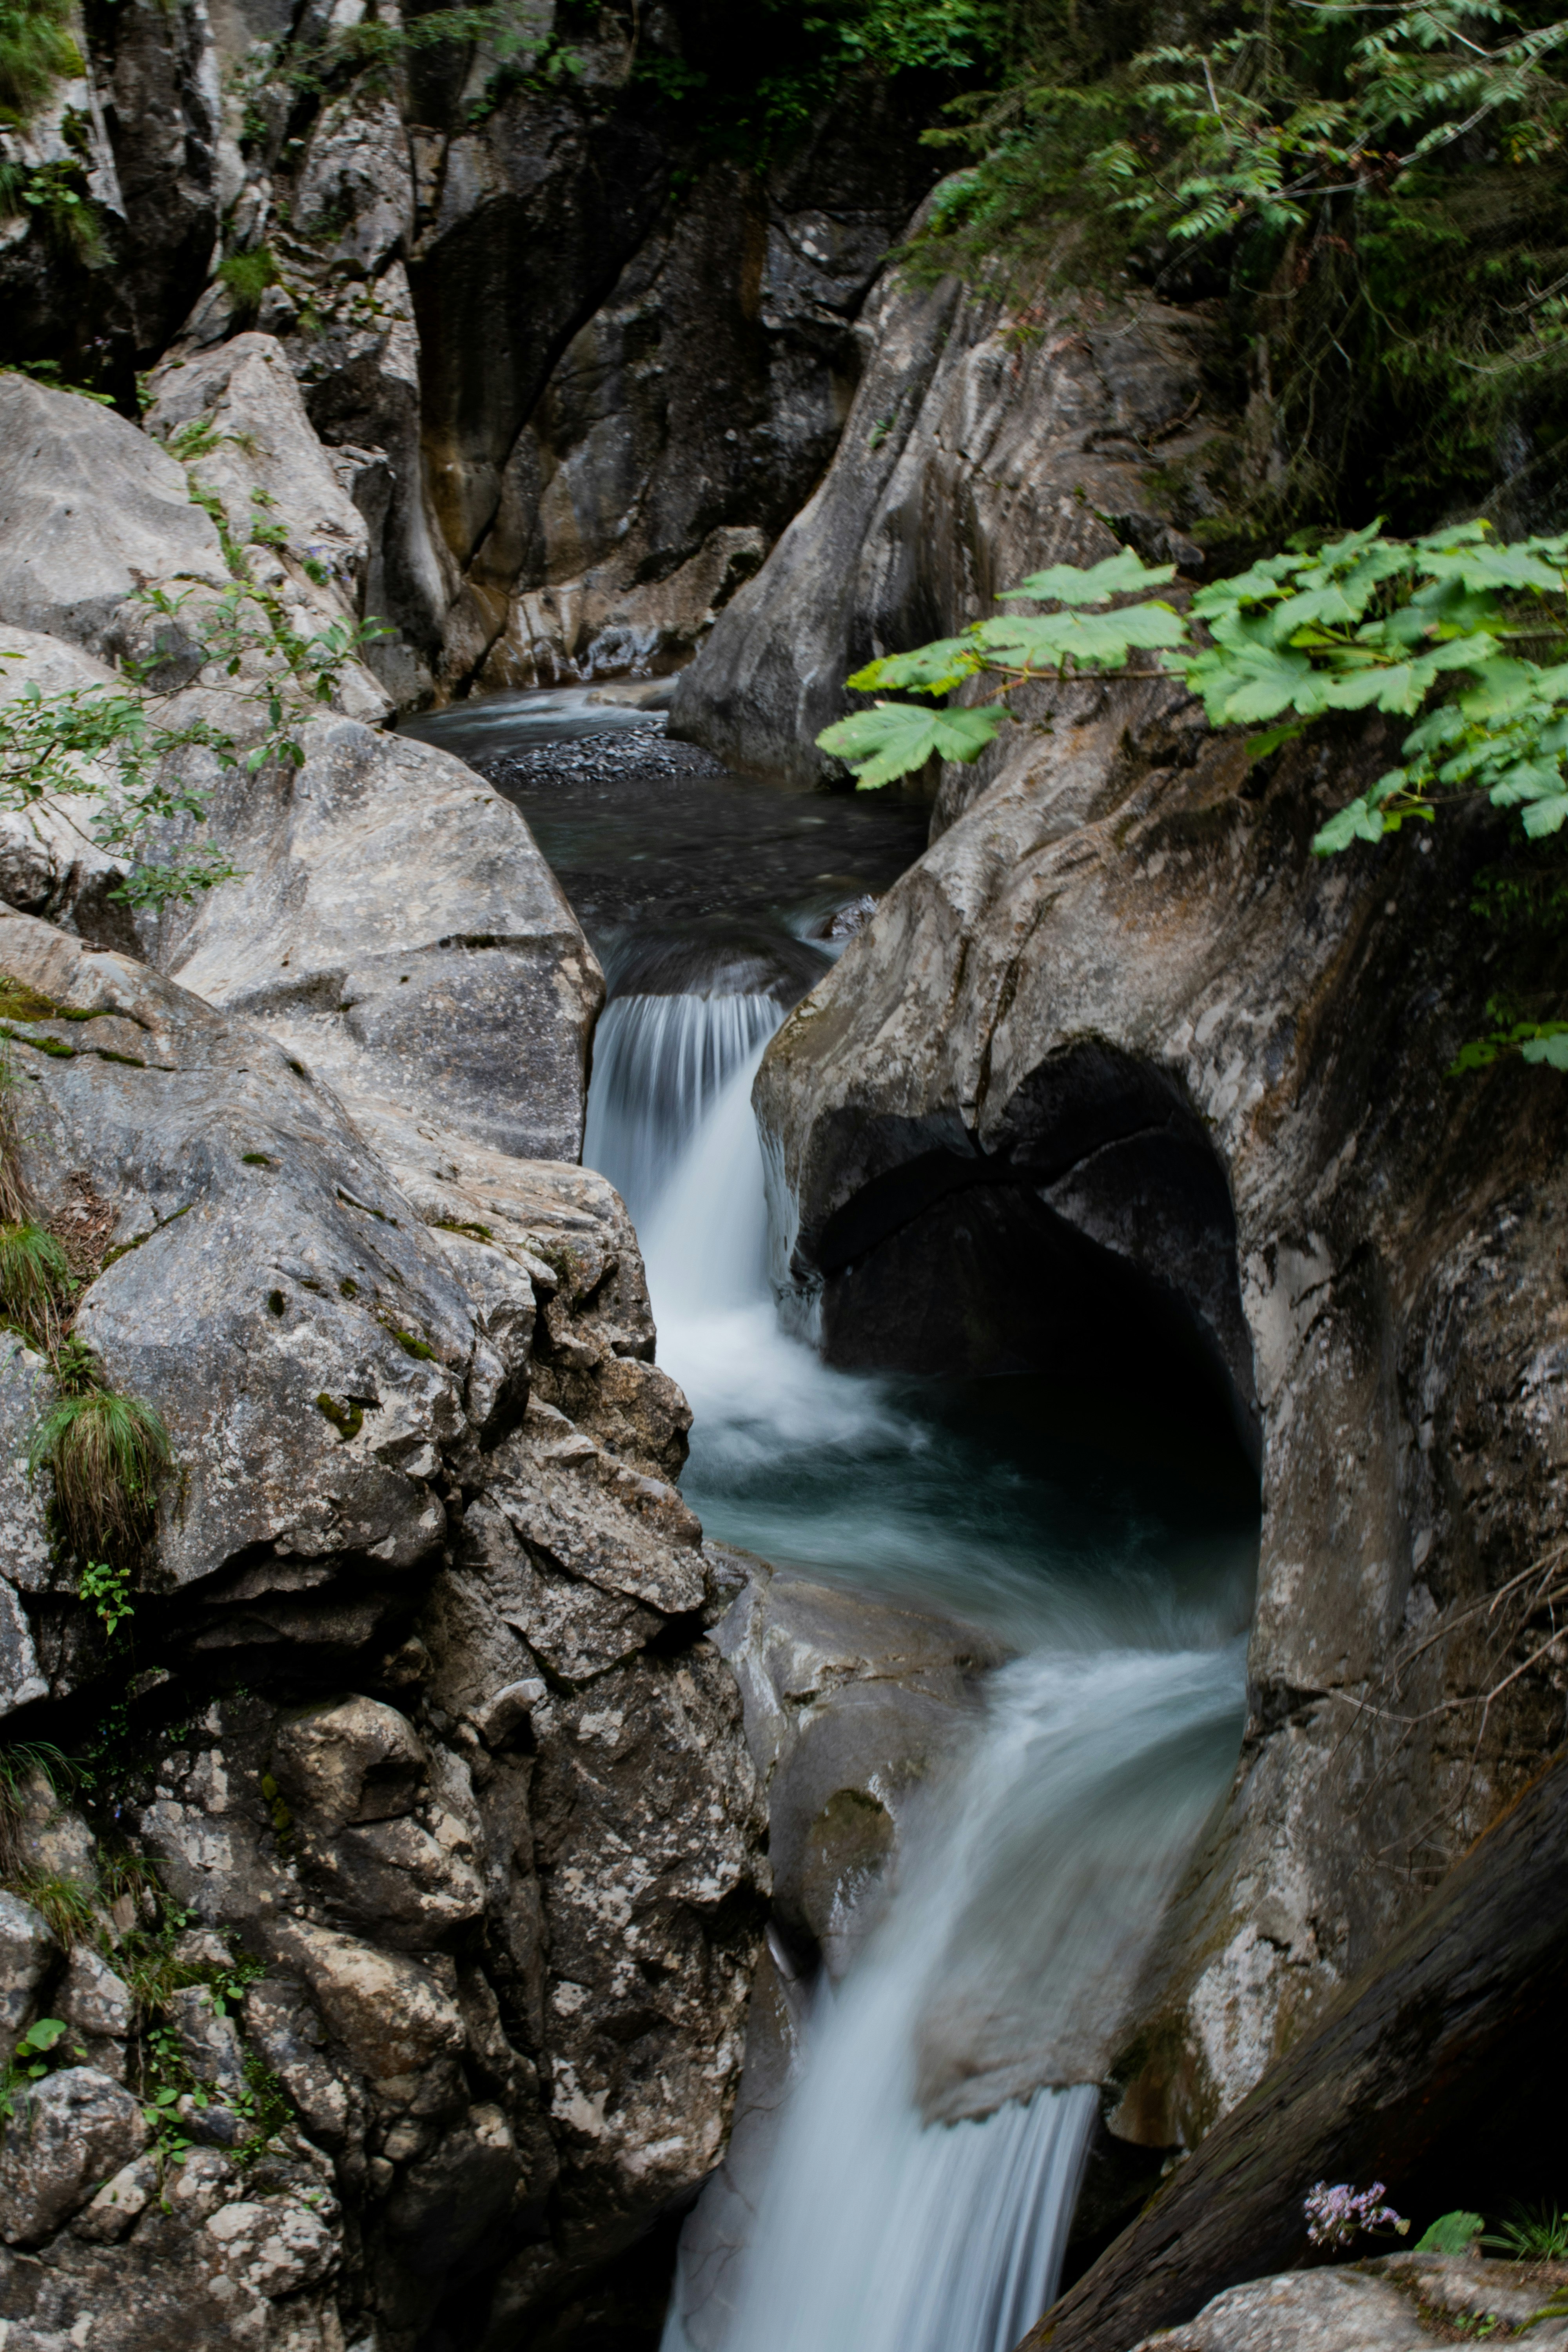 water falls between rocks and rocks